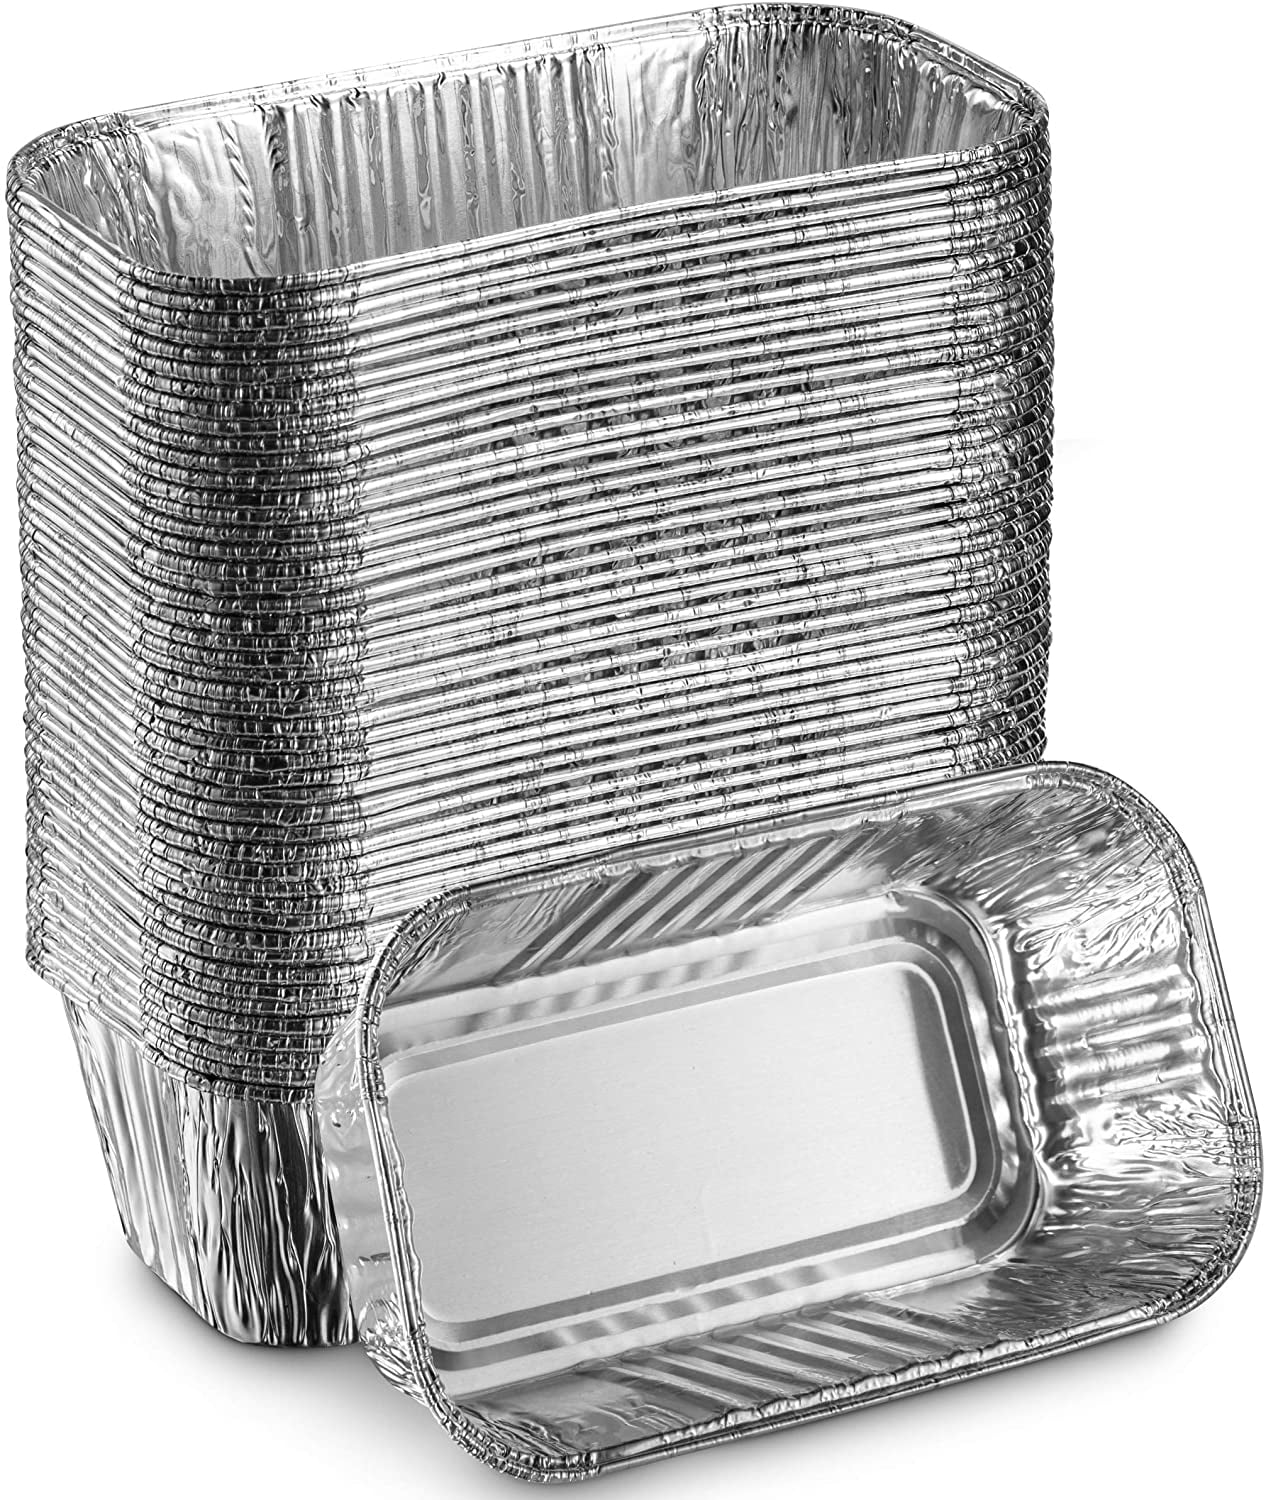 MontoPack Disposable Aluminum Foil Square Baking Pans 9x9 Cake Tins 20 Pack